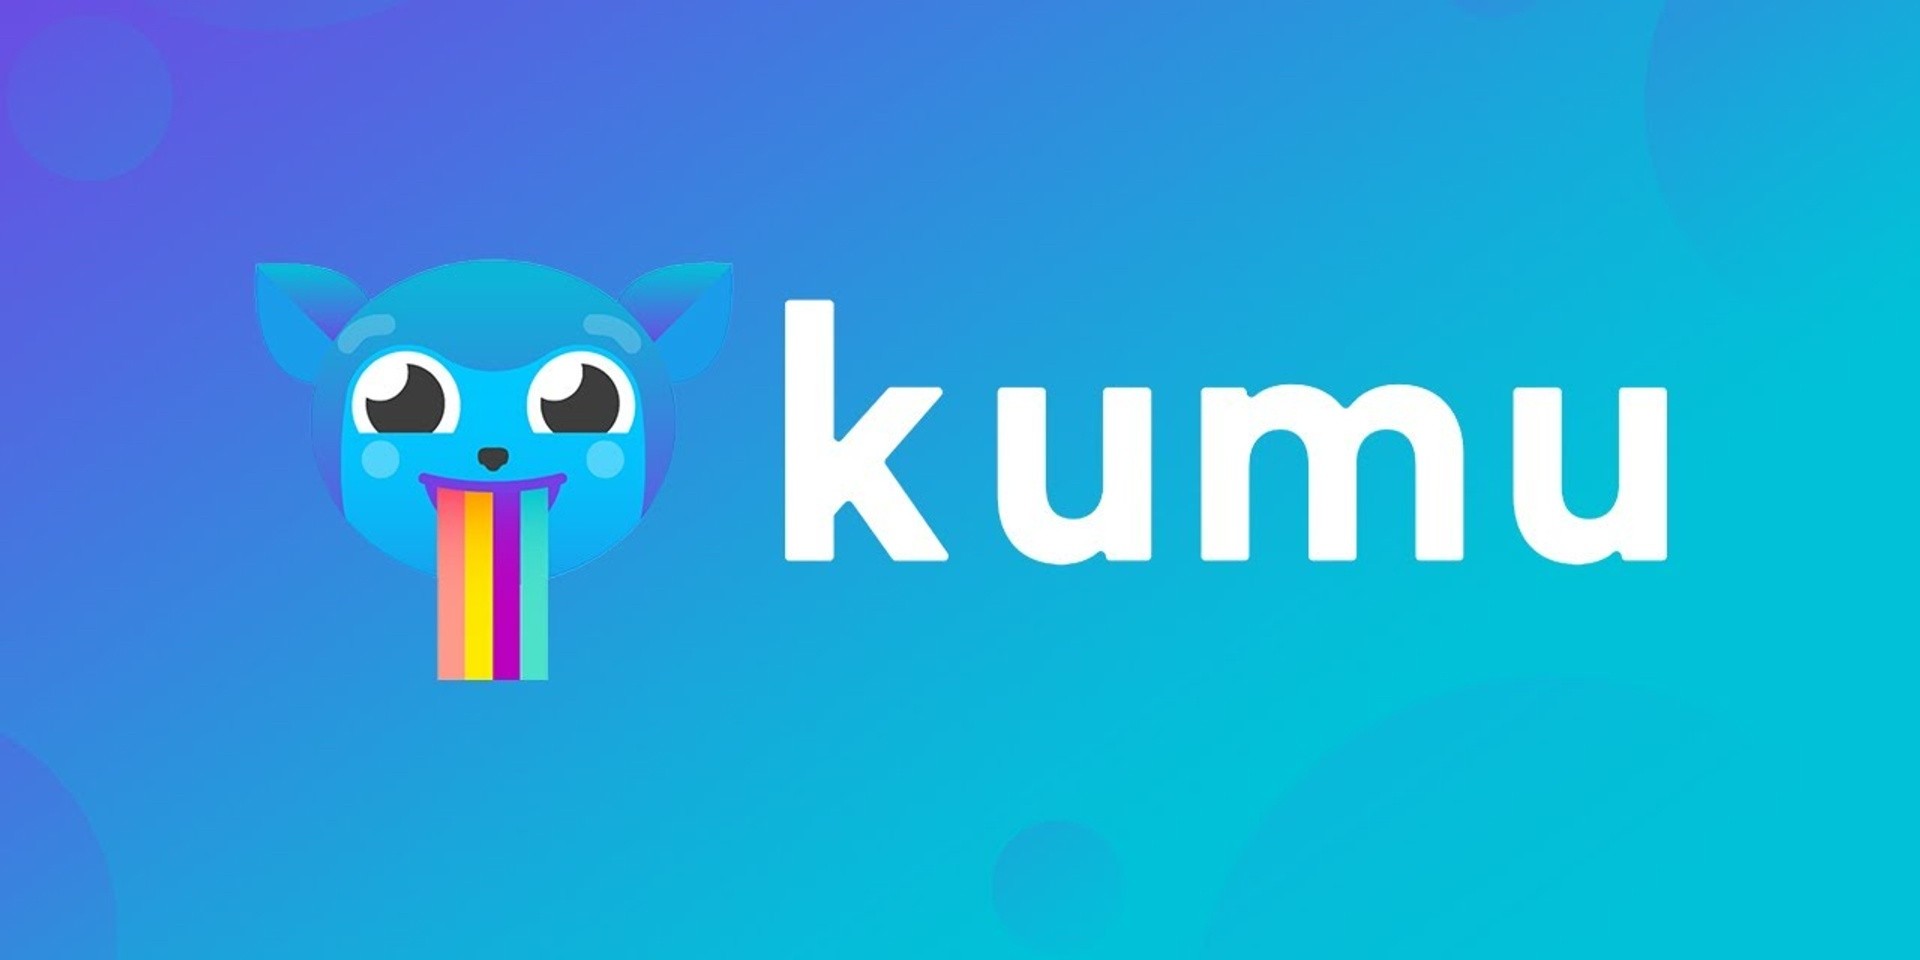 KUMU to host 4th birthday concert this September